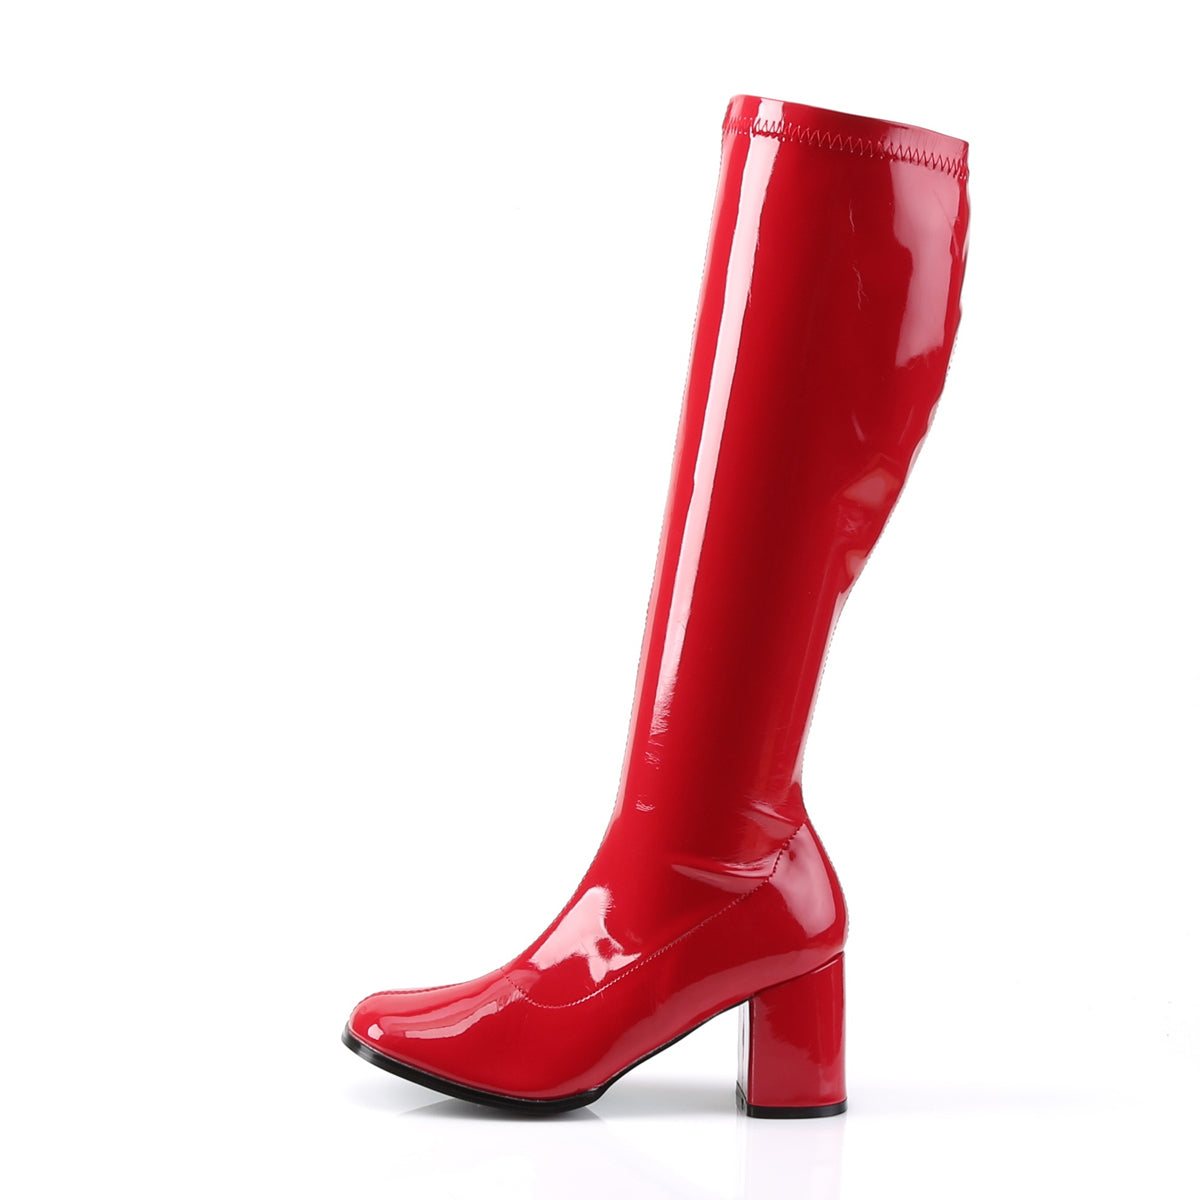 GOGO-300 3 Inch Heel Red Women's Boots Funtasma Costume Shoes 